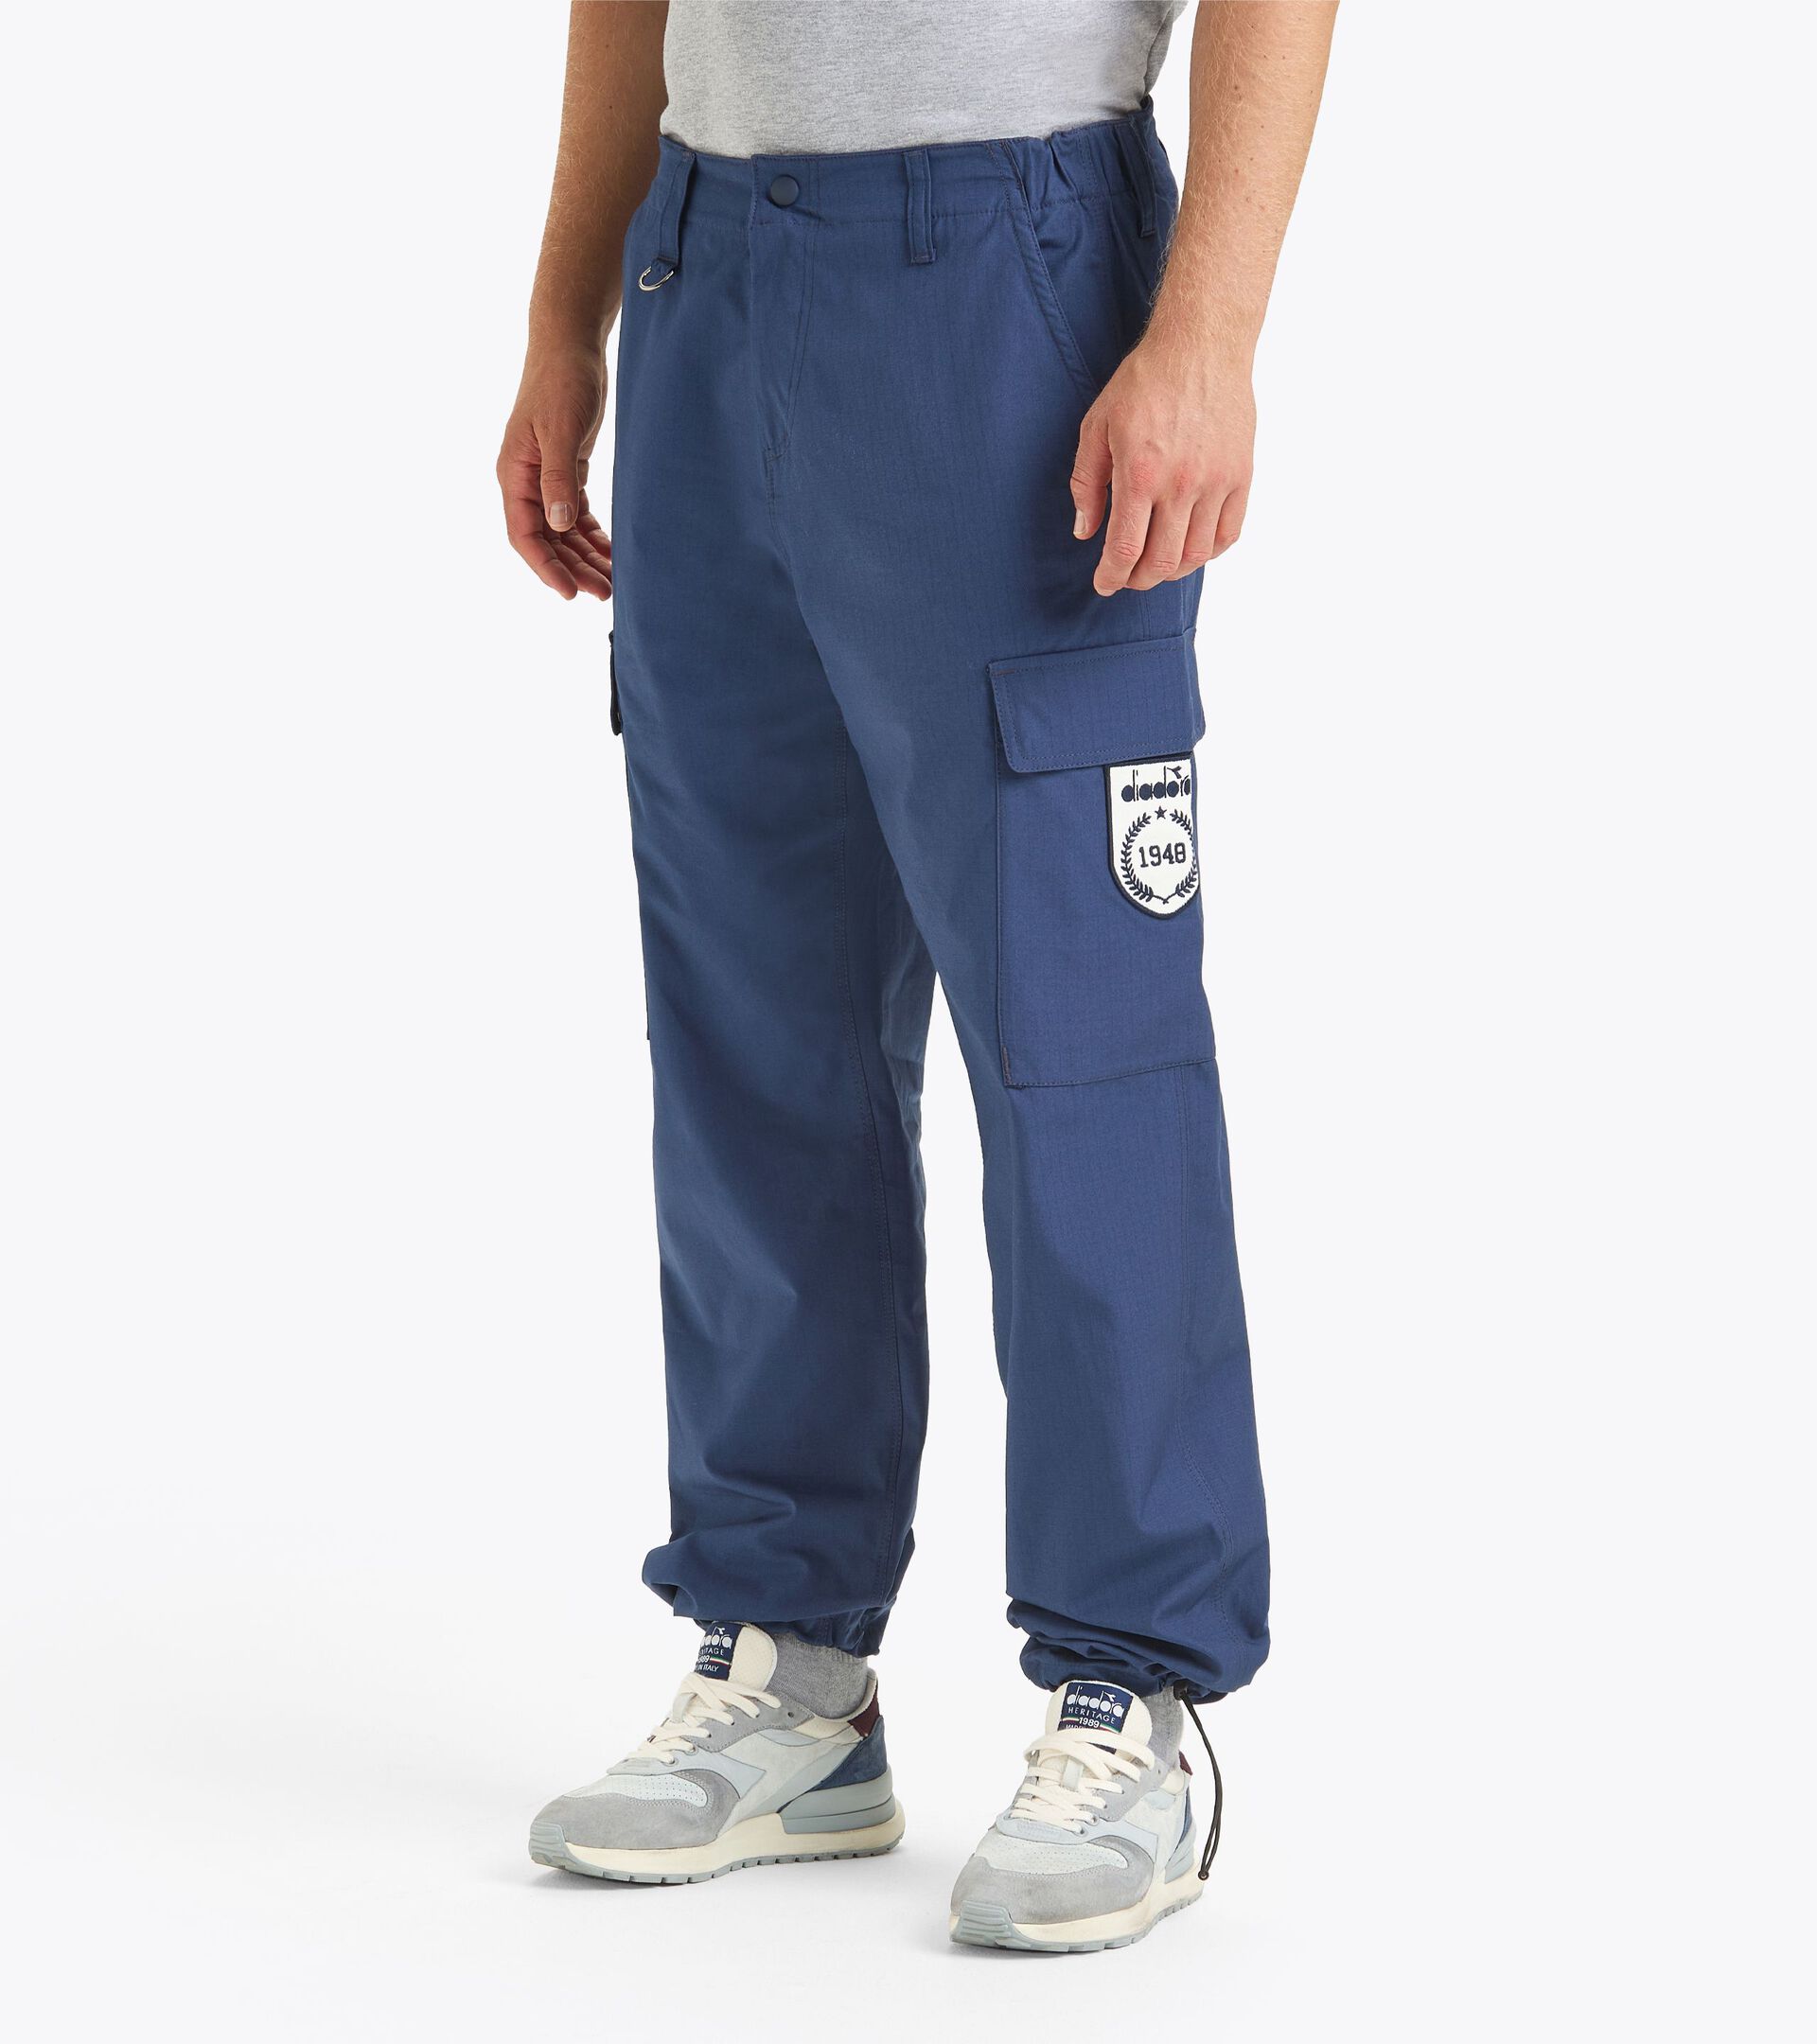 Full Blue Big & Tall Men's Cargo Pants 100% Cotton 42 X 28 Navy